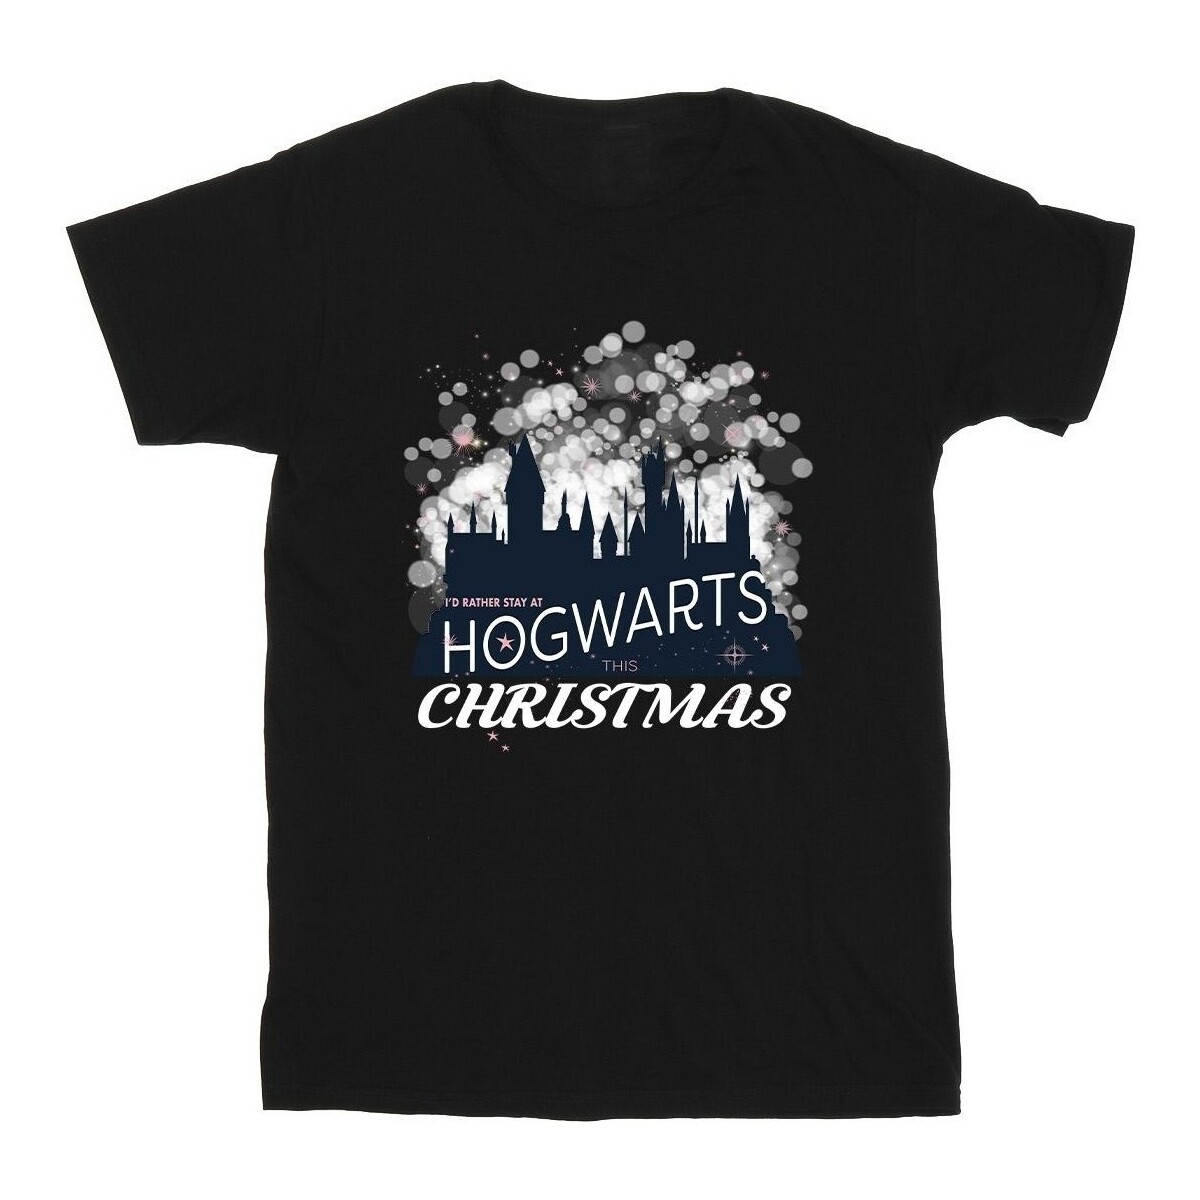 textil Niña Camisetas manga larga Harry Potter Hogwarts Christmas Negro